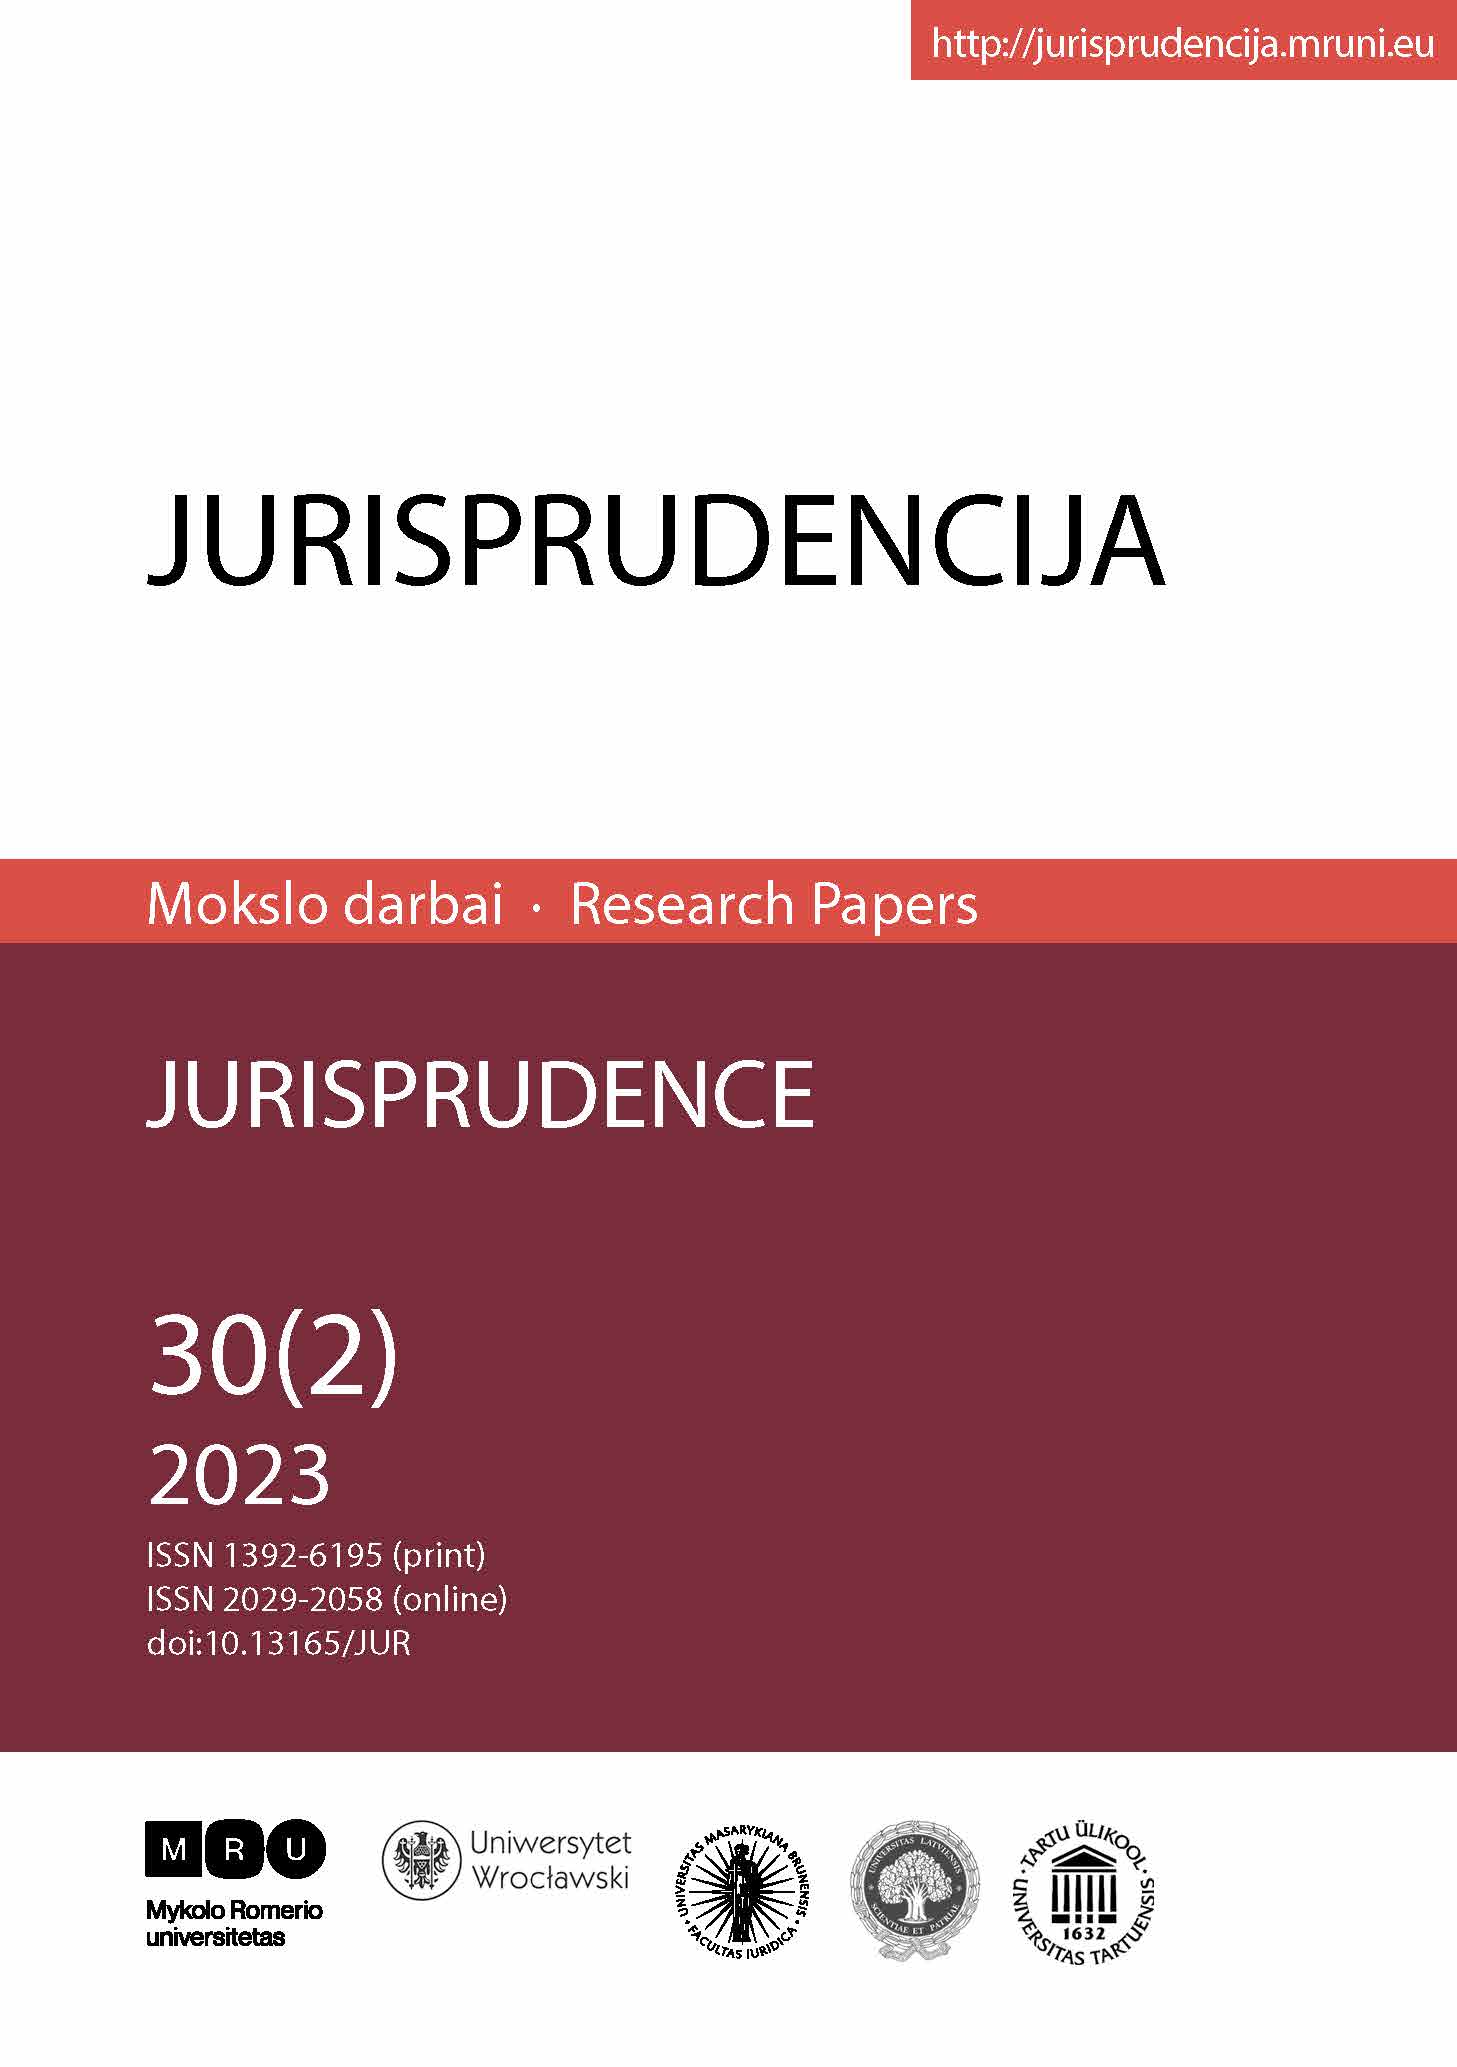 THE REFORM OF THE ADMINISTRATIVE JUDICIARY IN AUSTRIA: A BRIEF PRESENTATION Cover Image